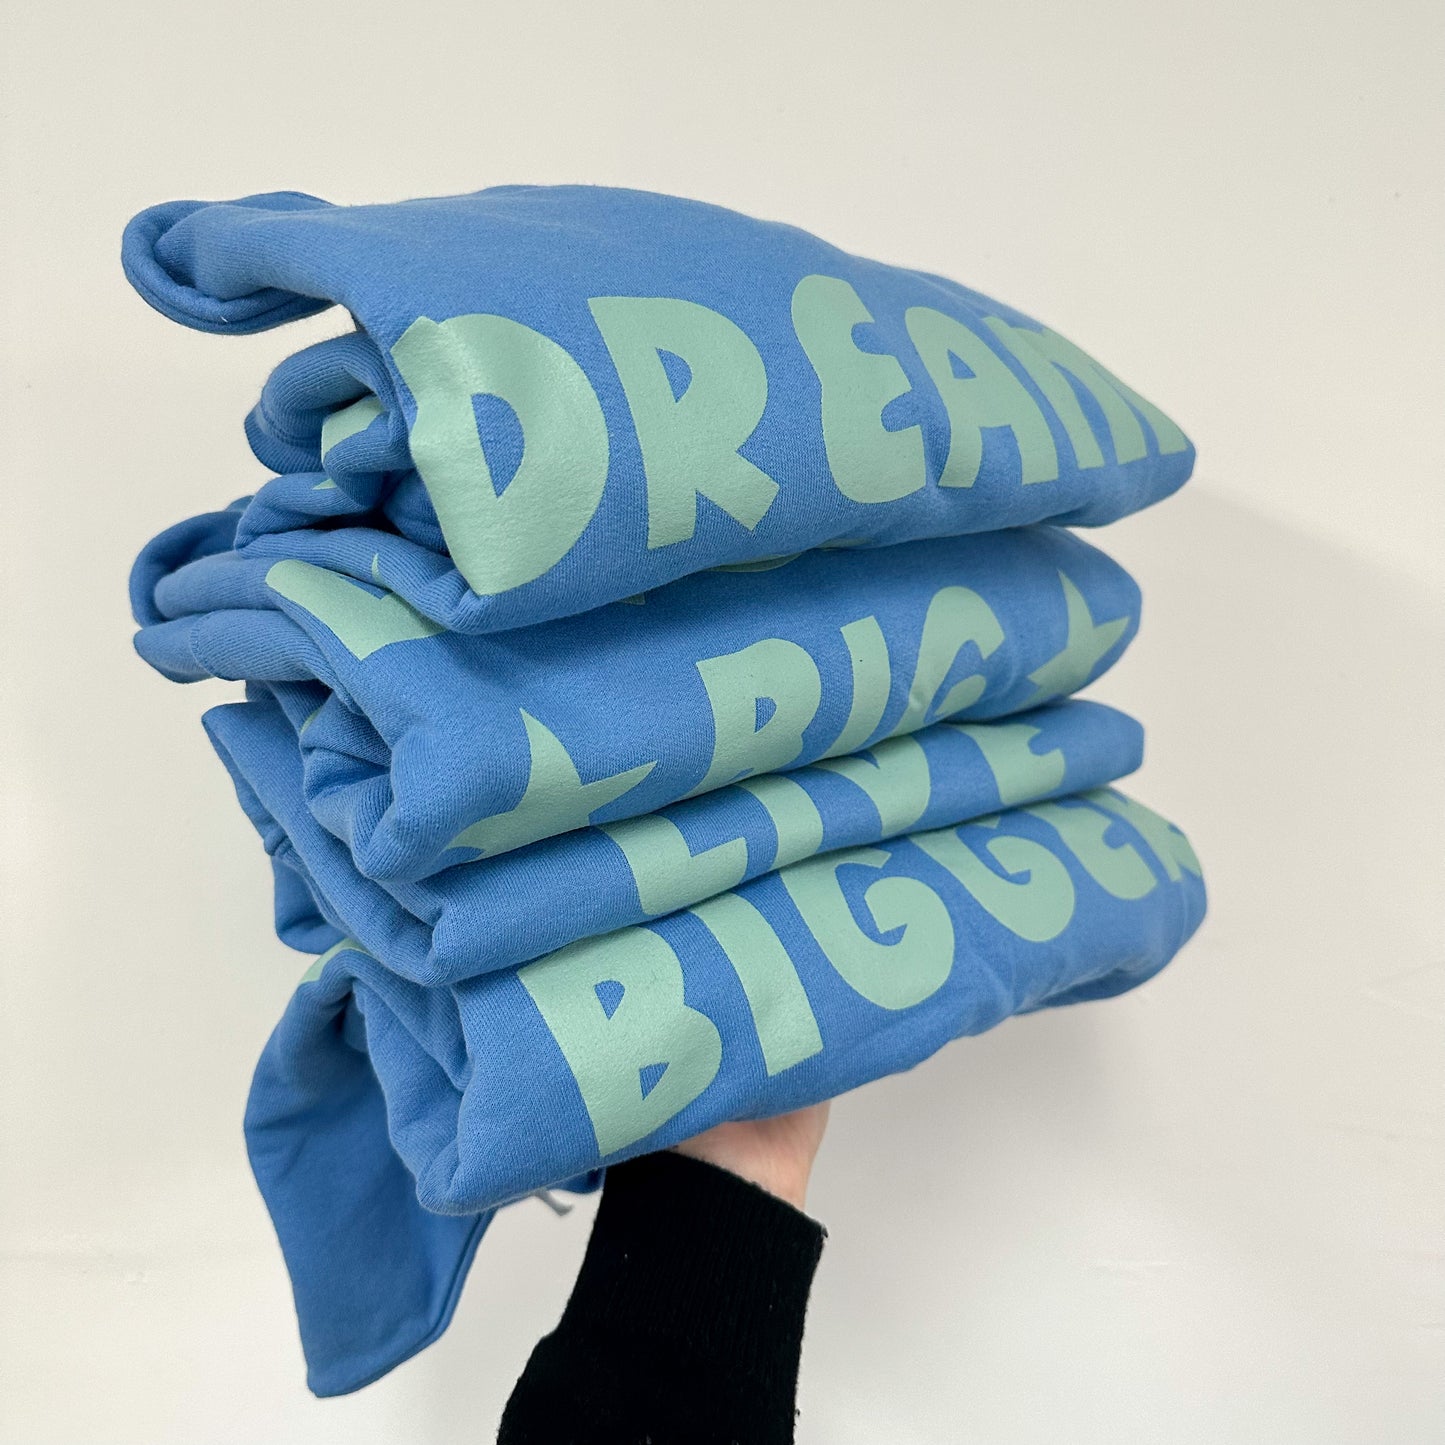 Blue Back Design Dream Big Live Bigger Limited Edition Crew